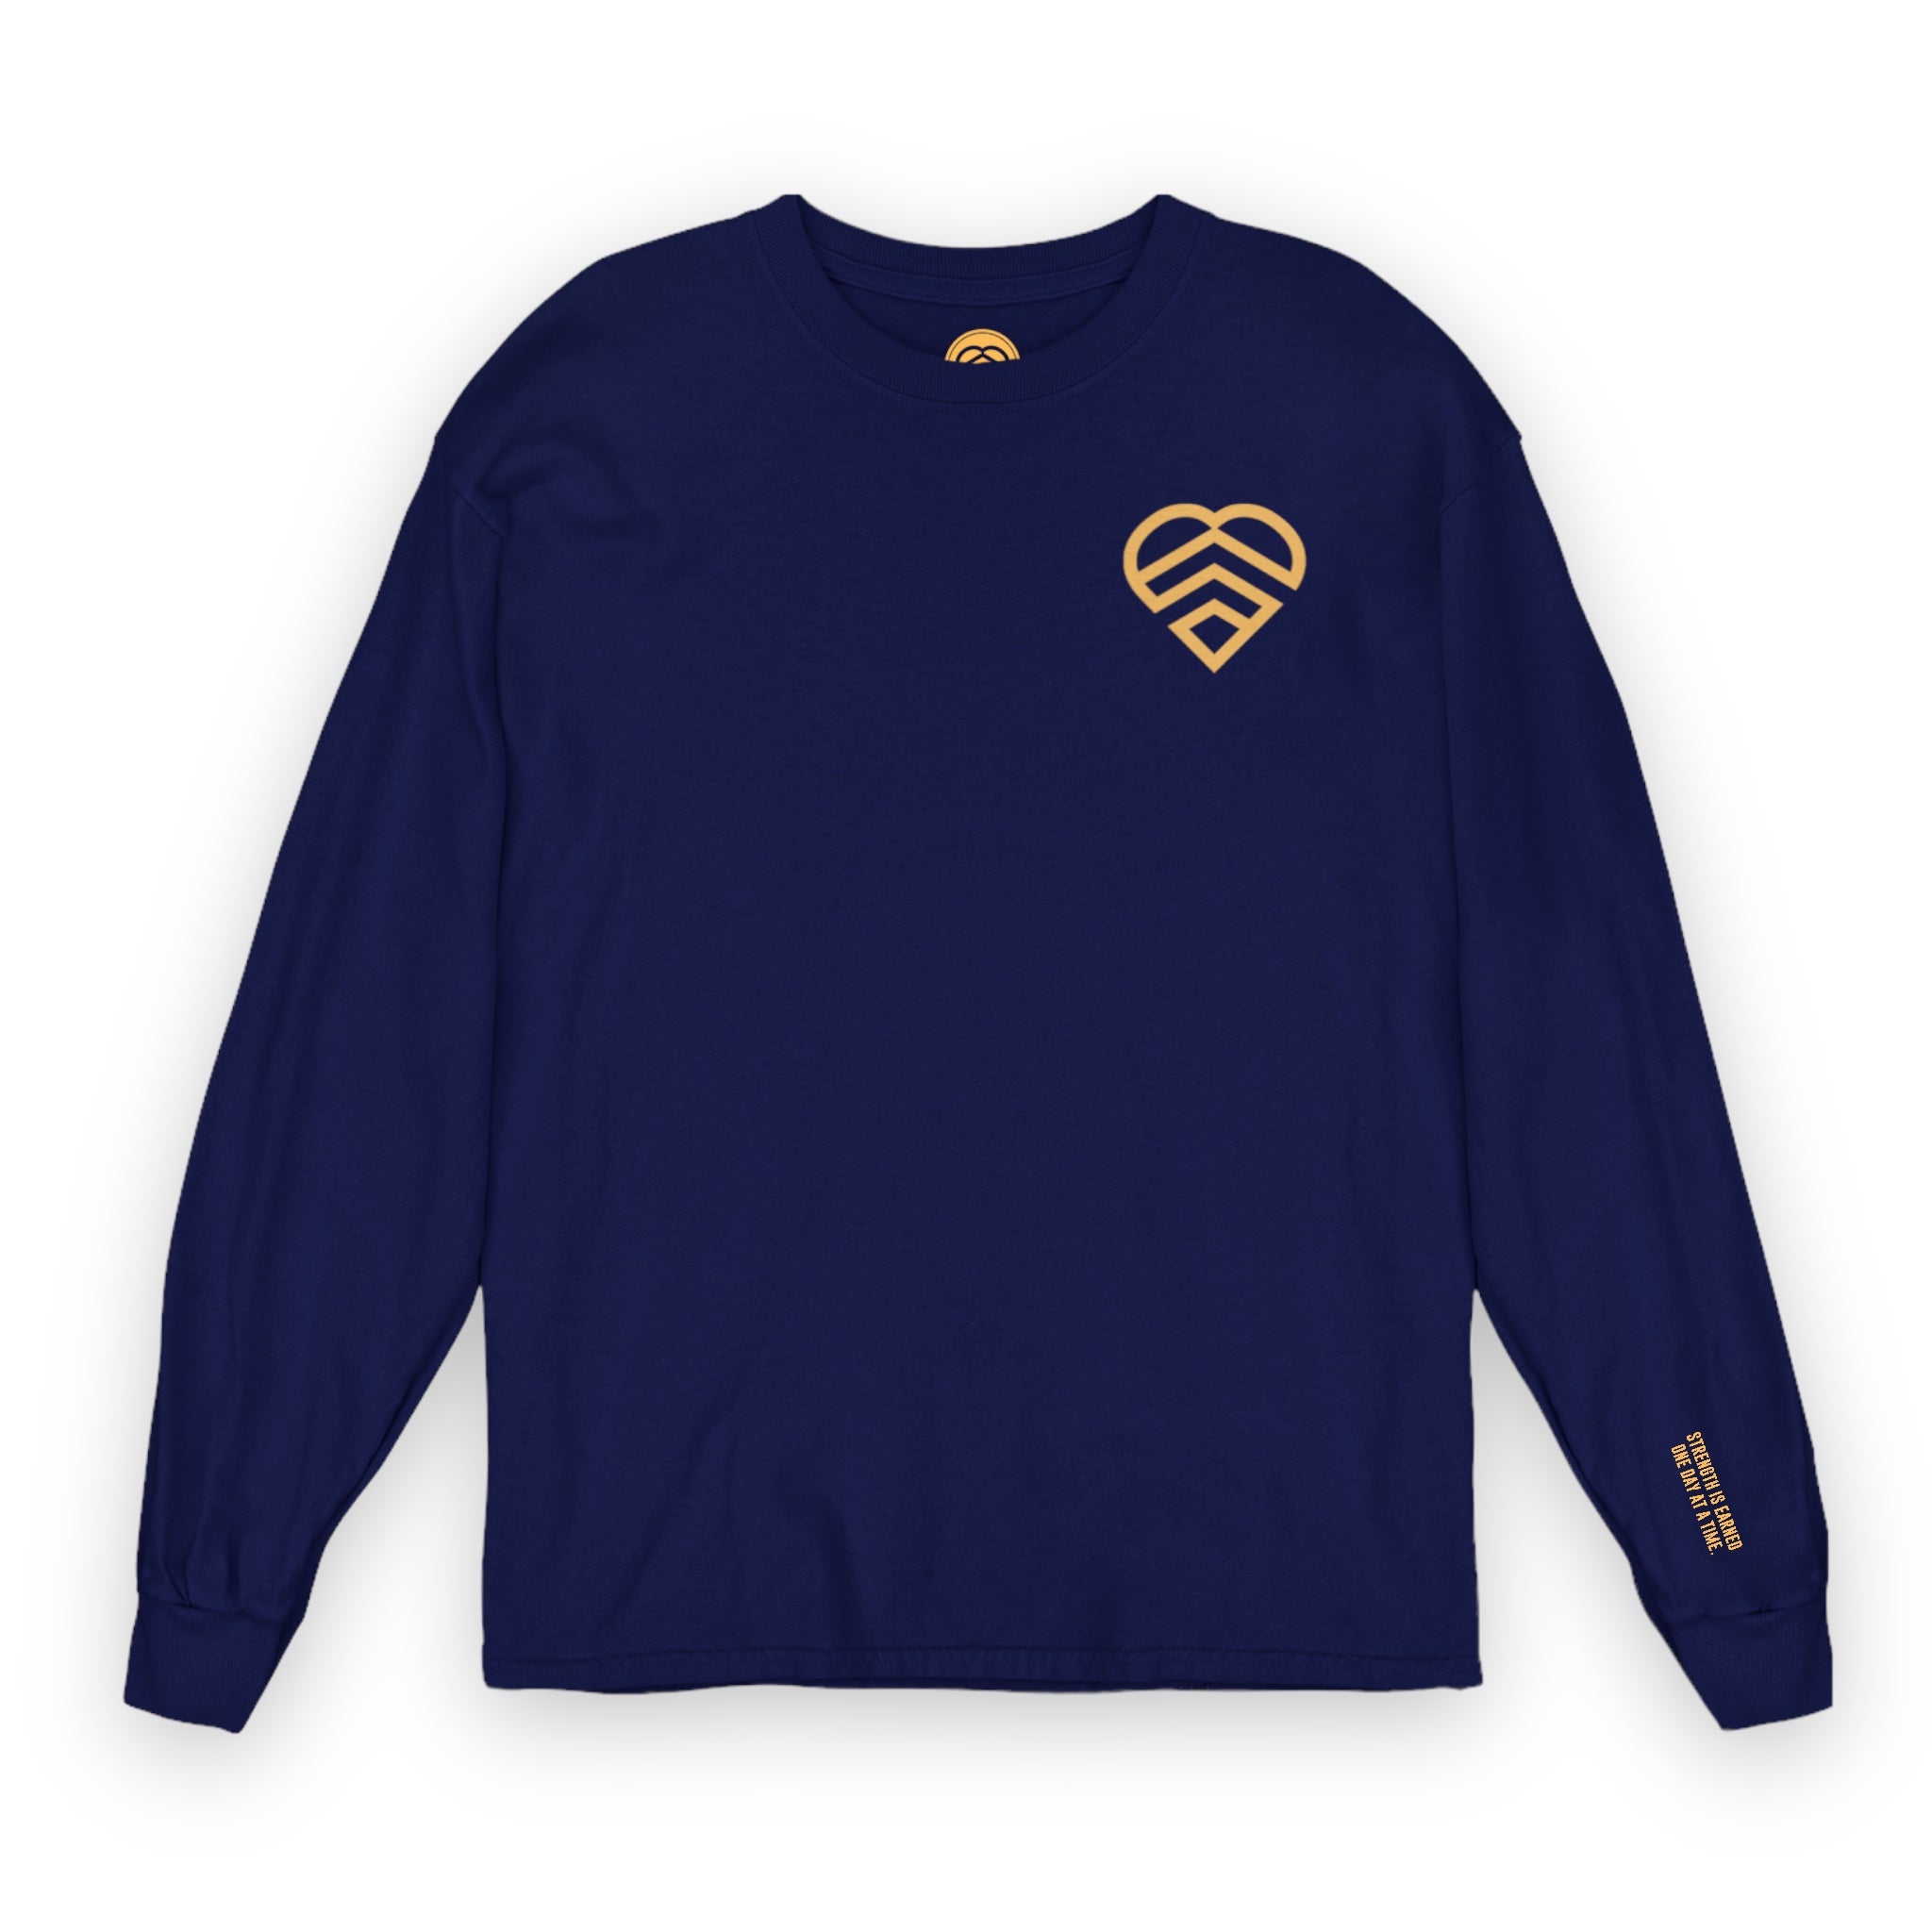 Mindset Club Long Sleeve Logo Shirt - Navy